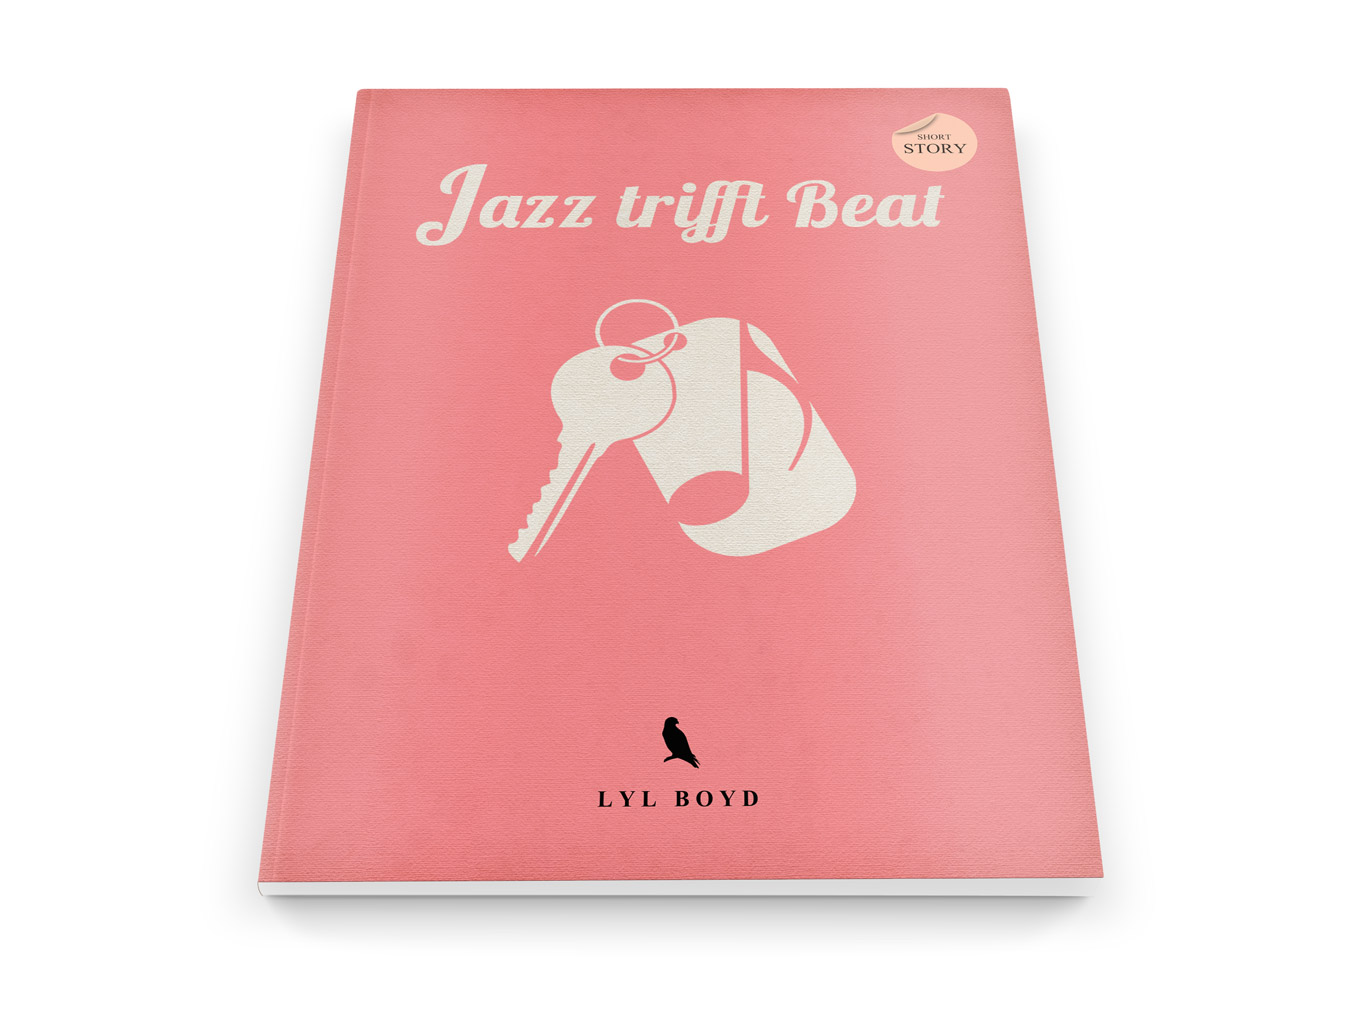 Jazz trifft Beat